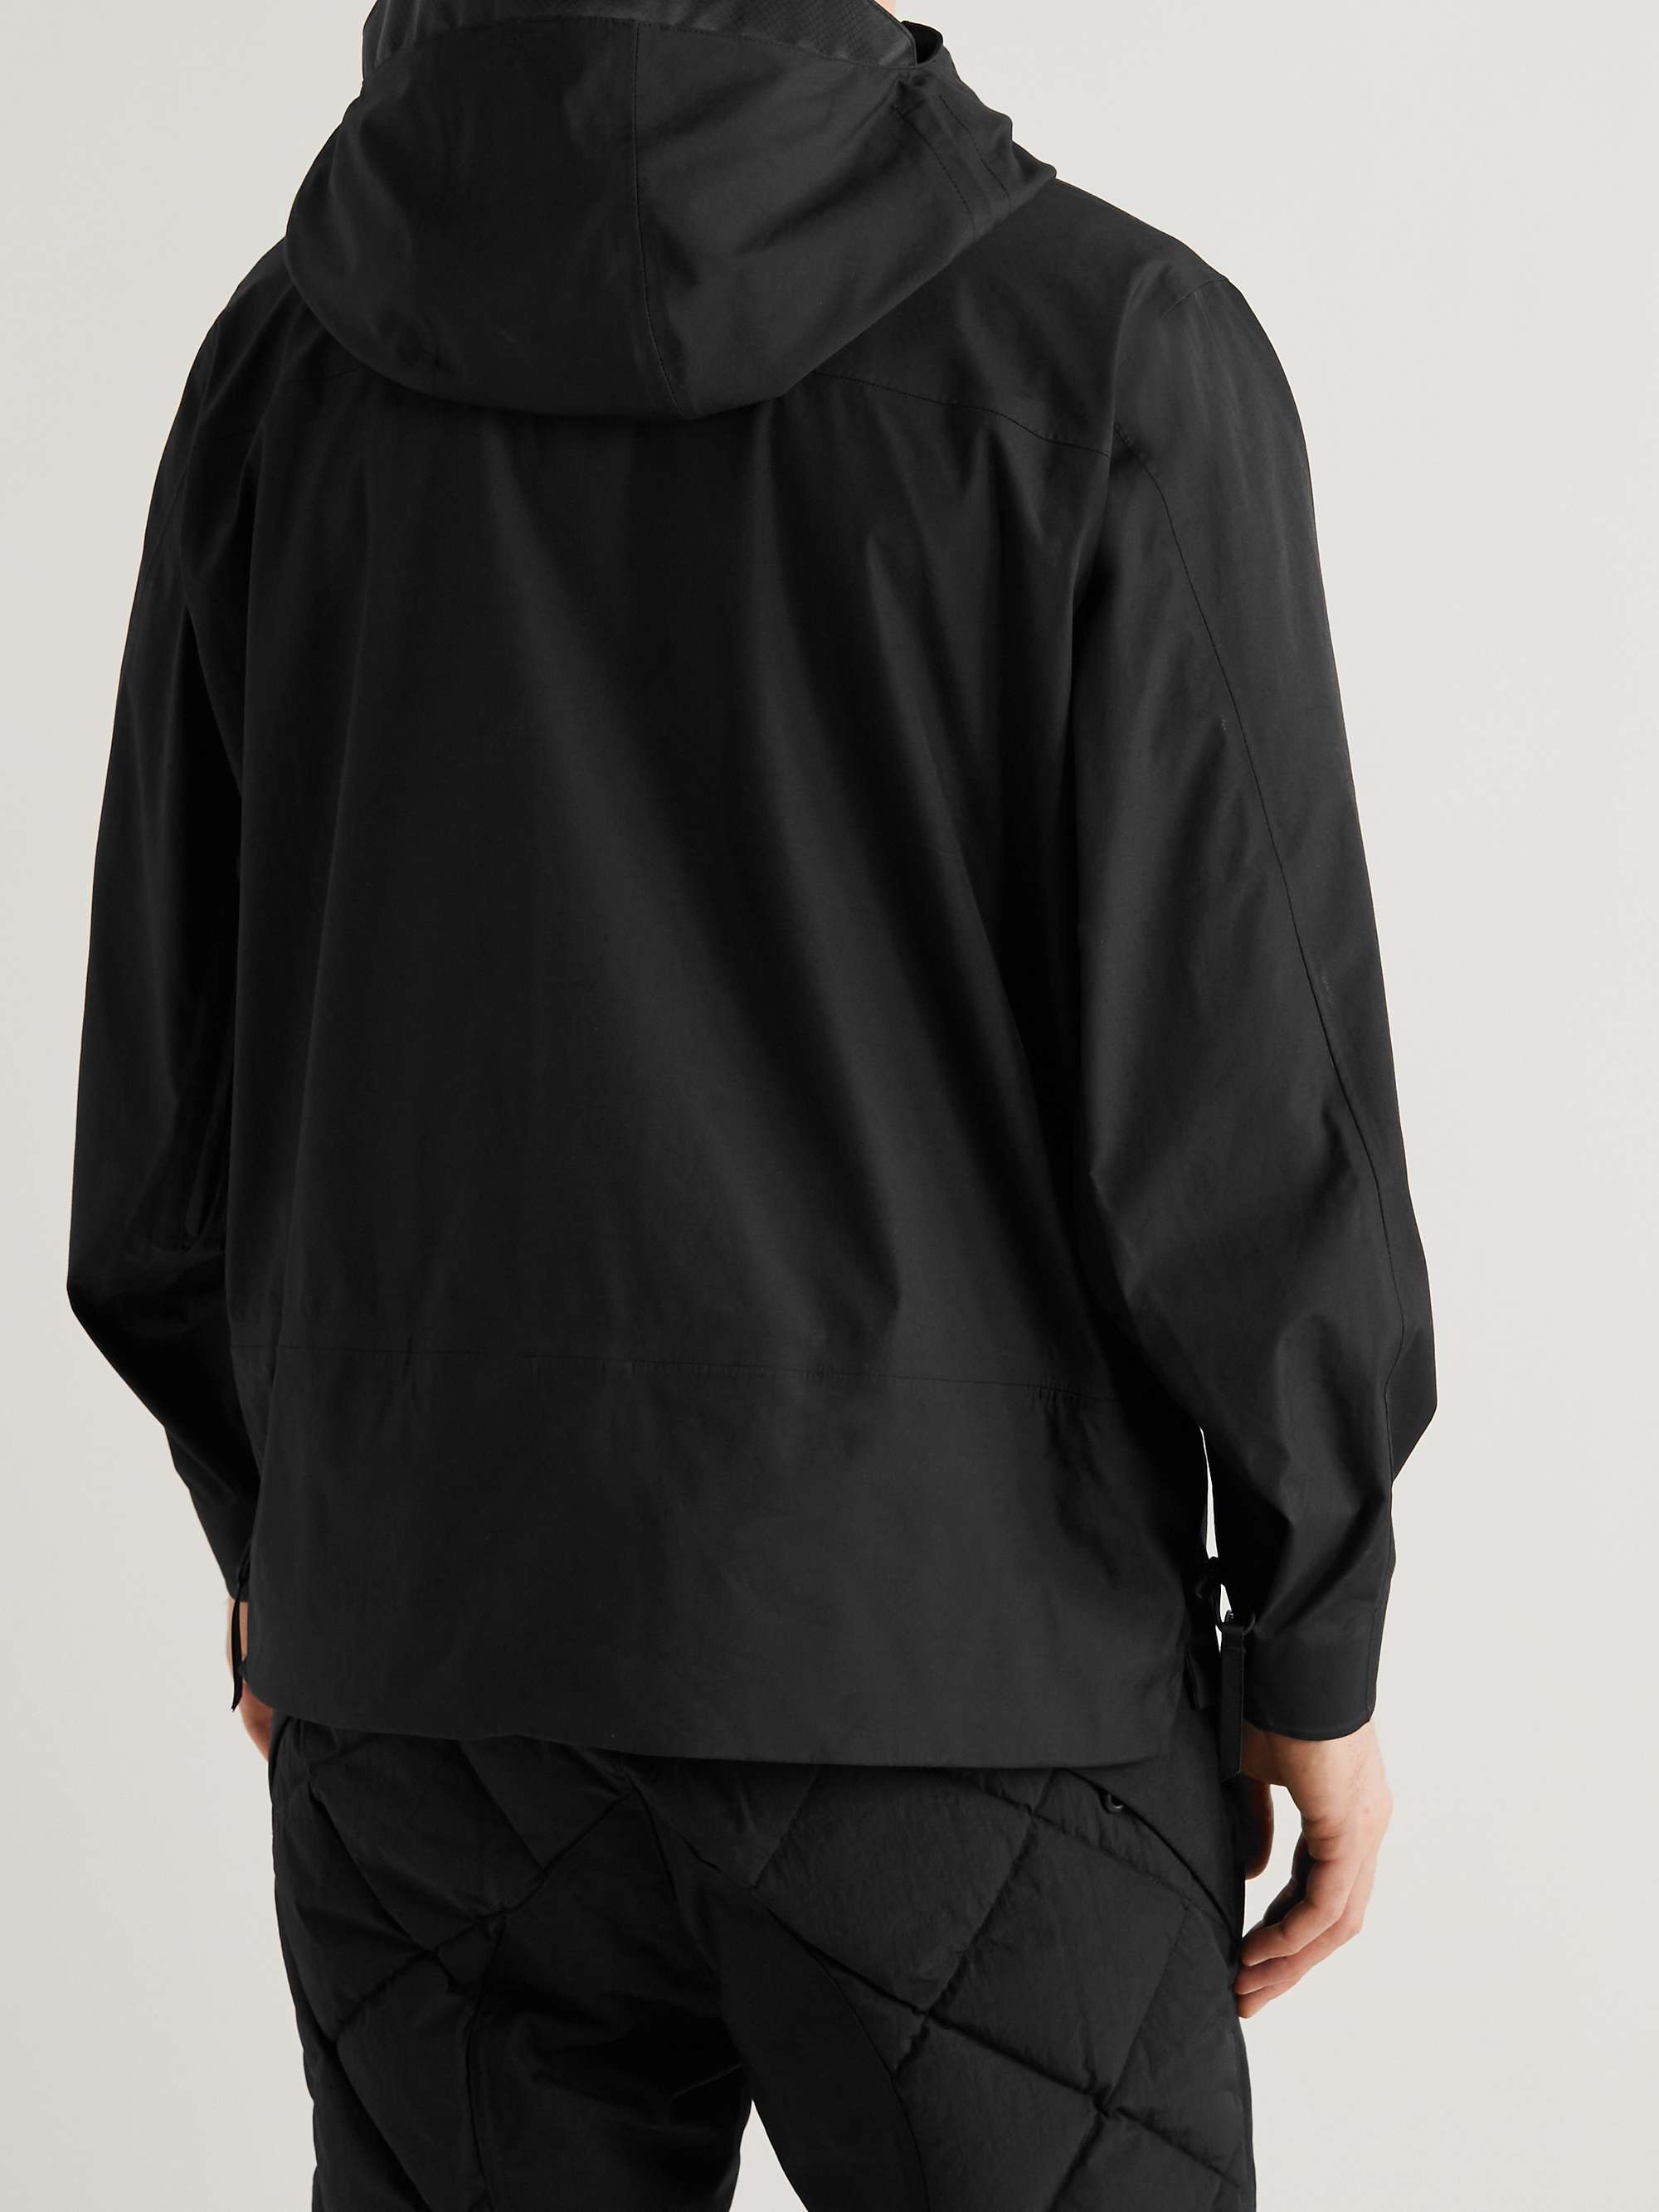 COMFY OUTDOOR GARMENT Waterproof Cotton-Blend Shell Hooded Jacket